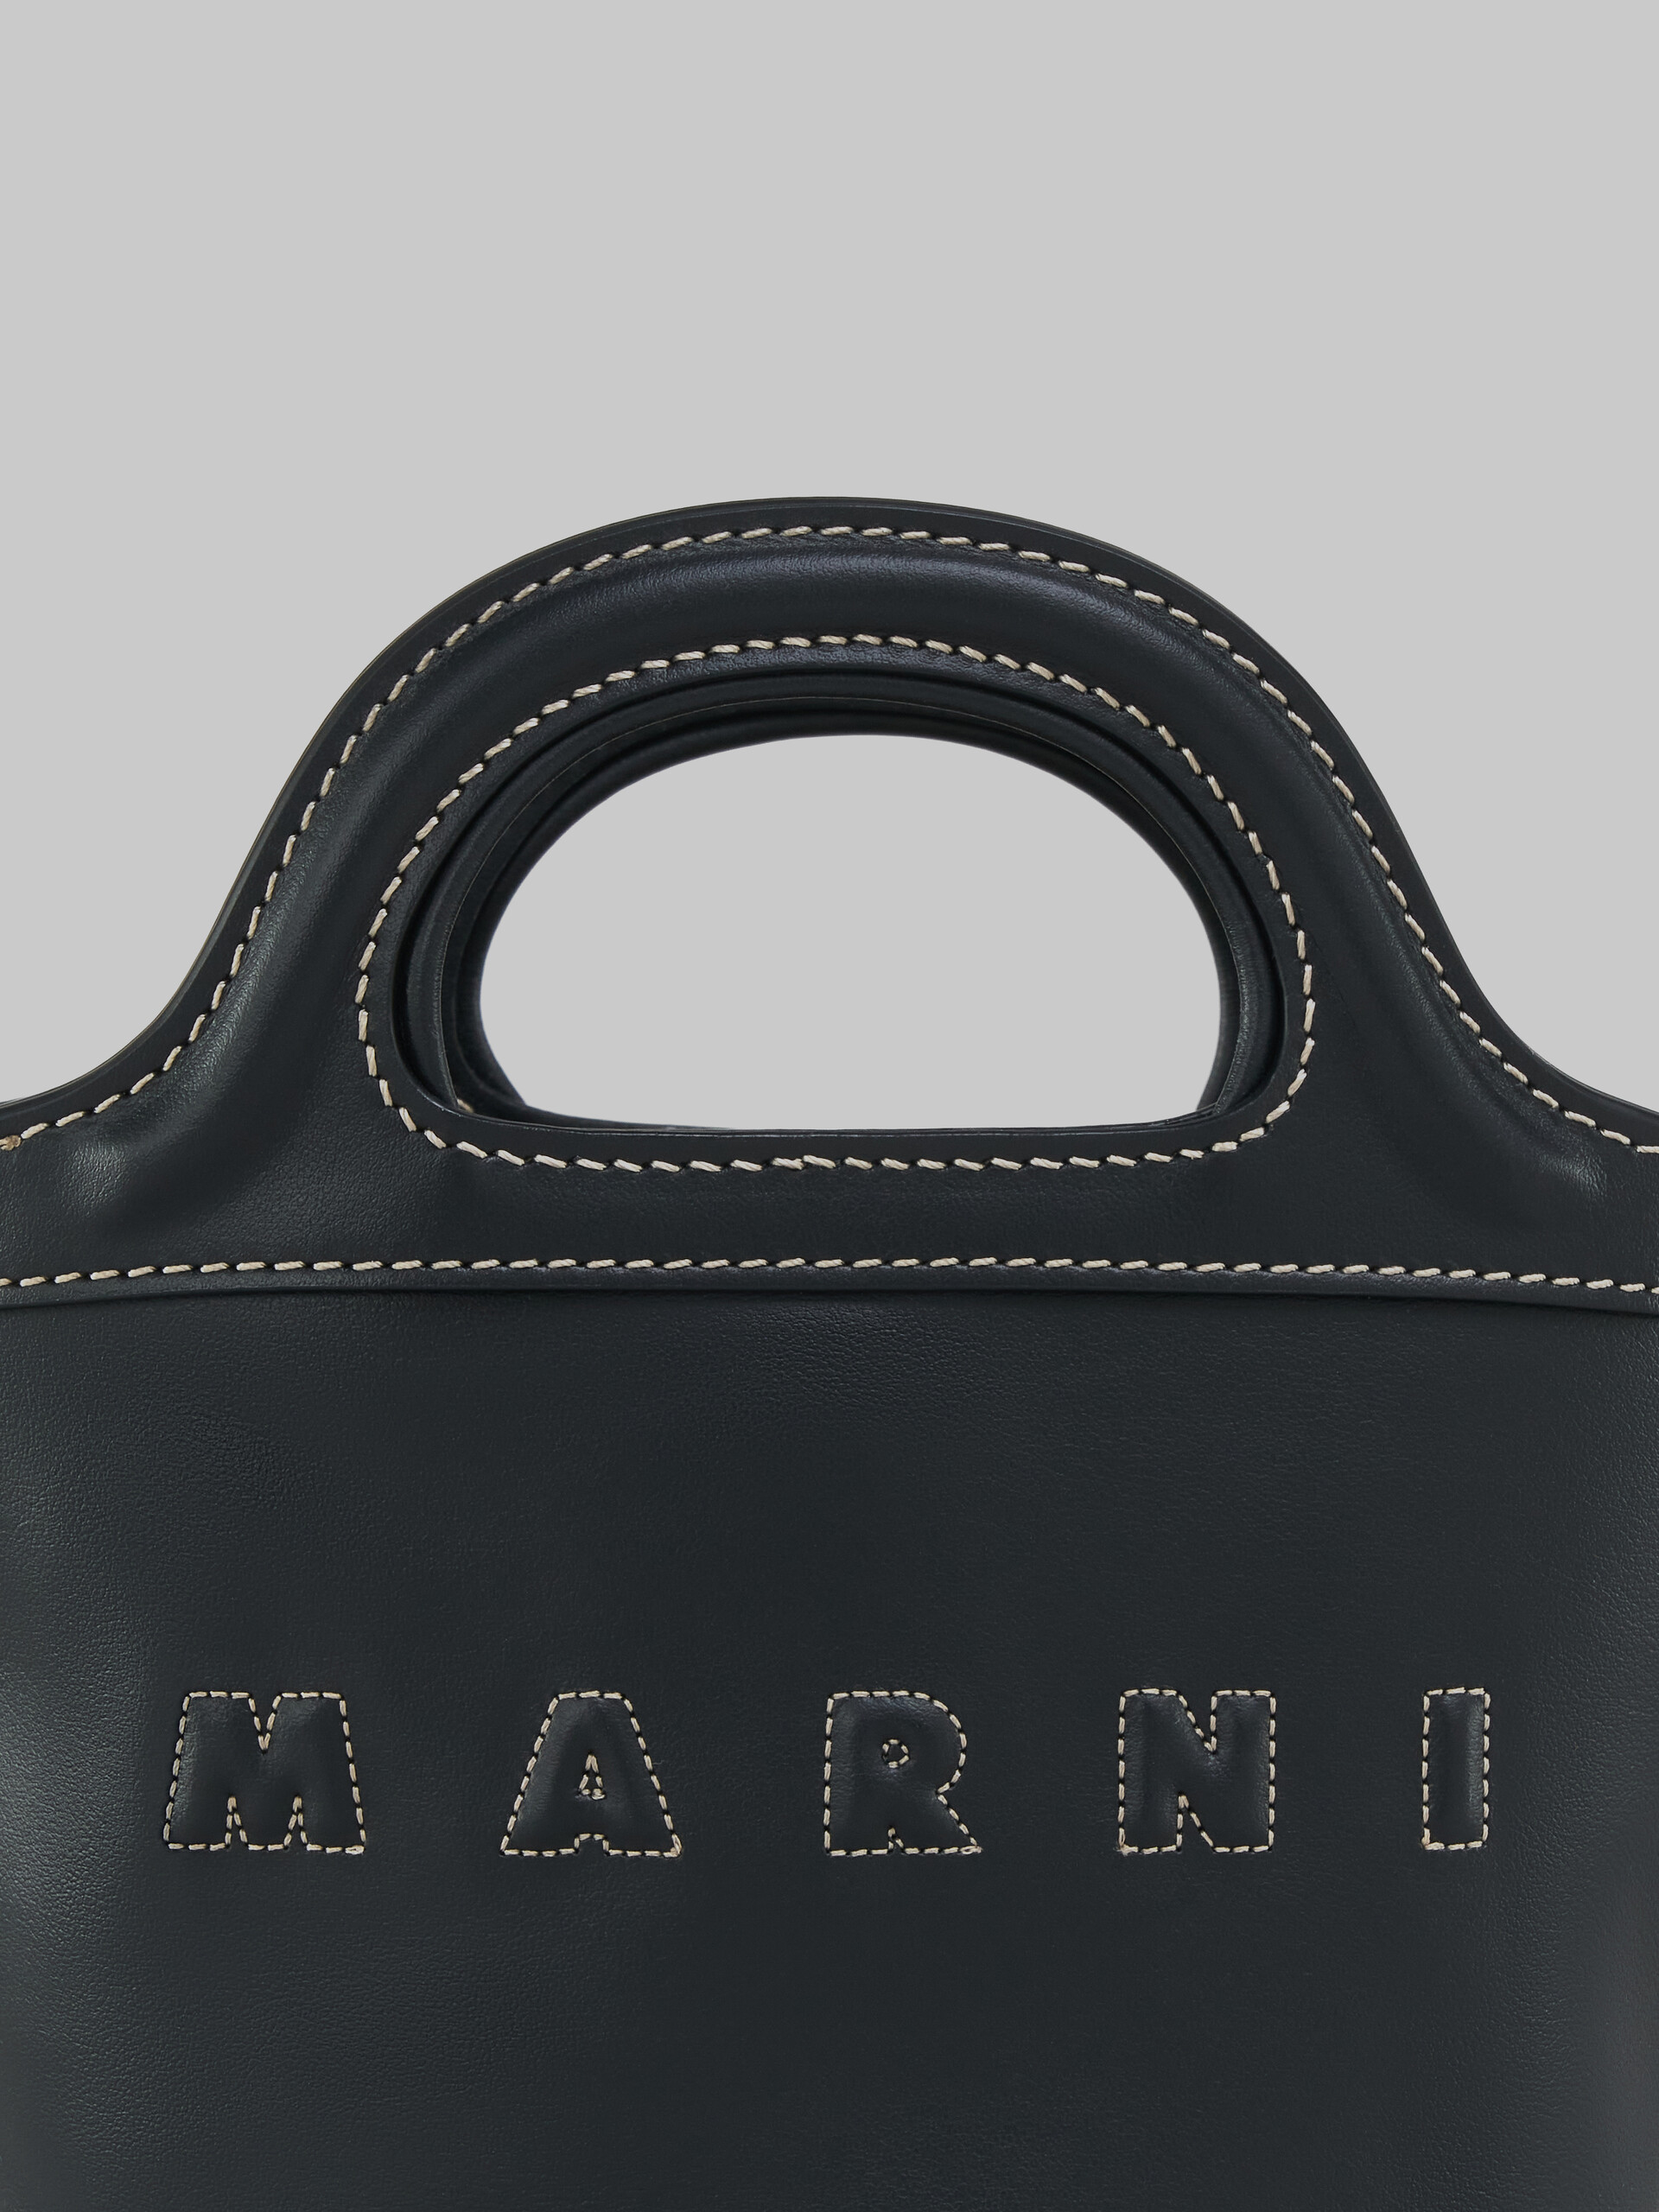 Tropicalia Micro Bag in brown leather - Handbags - Image 5